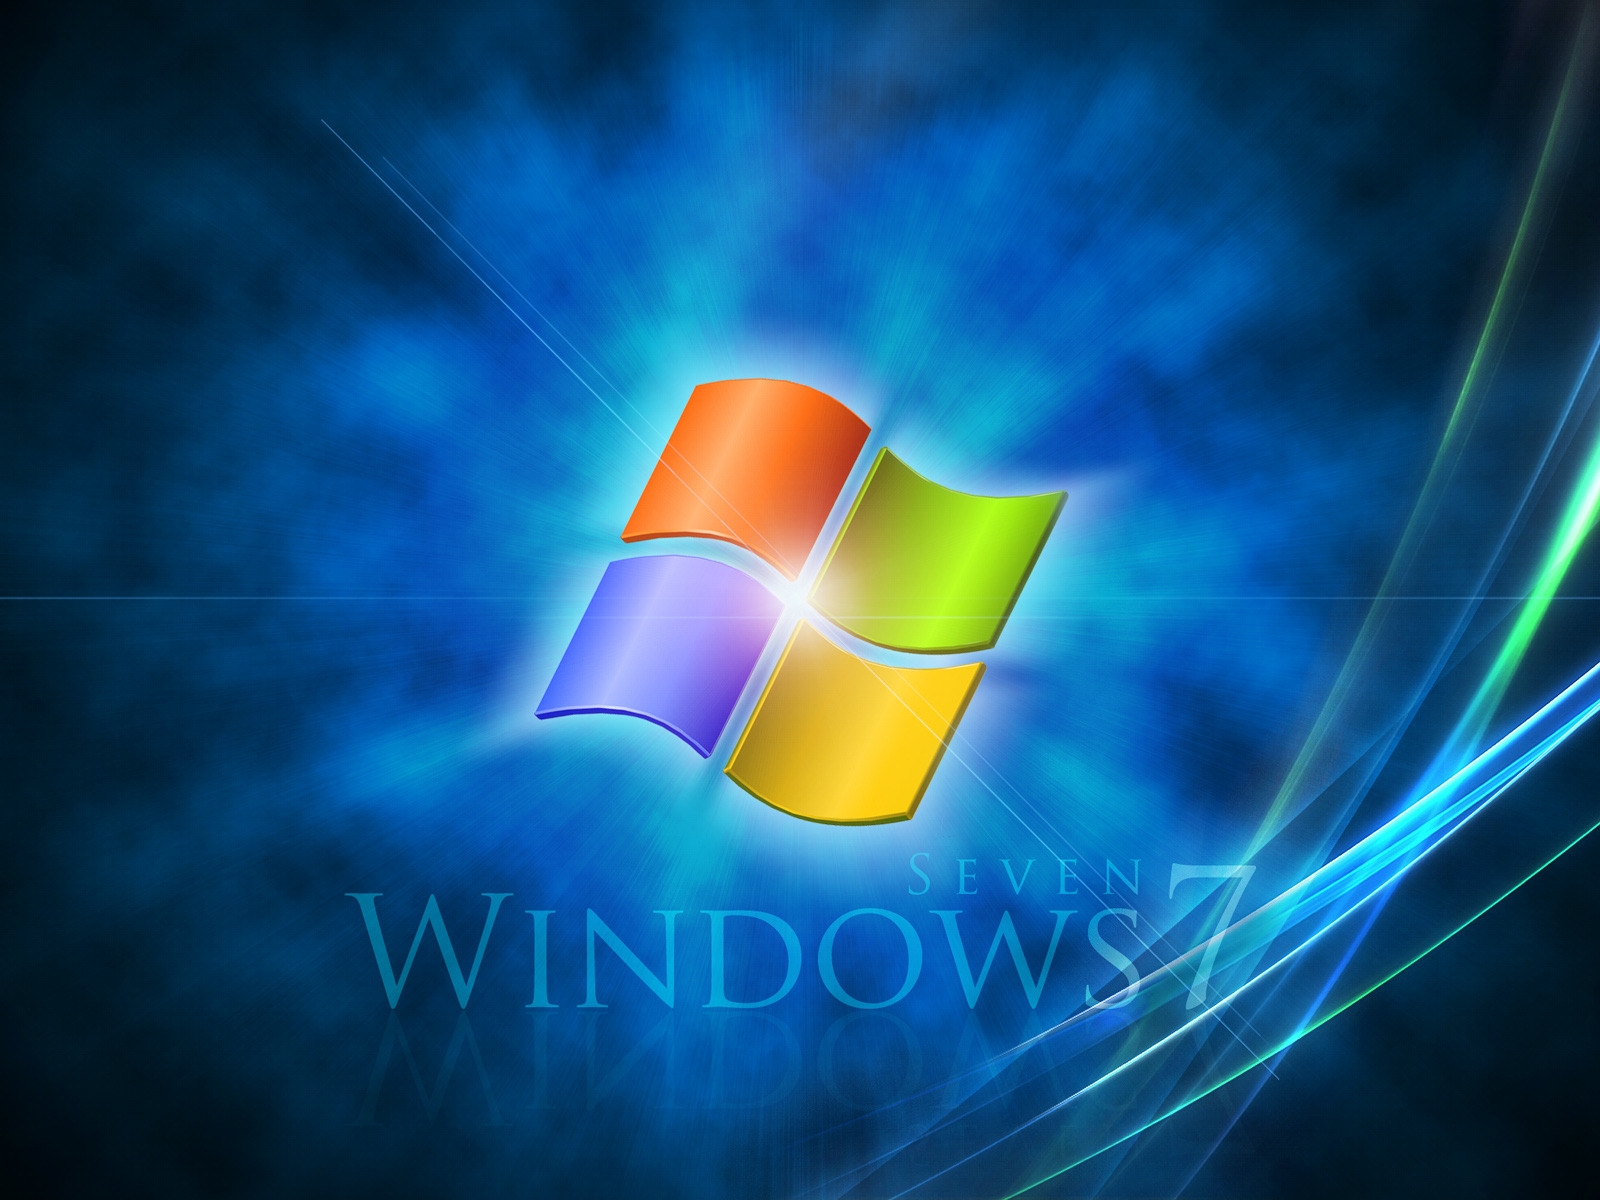 Windows 7 Light Rays for 1600 x 1200 resolution